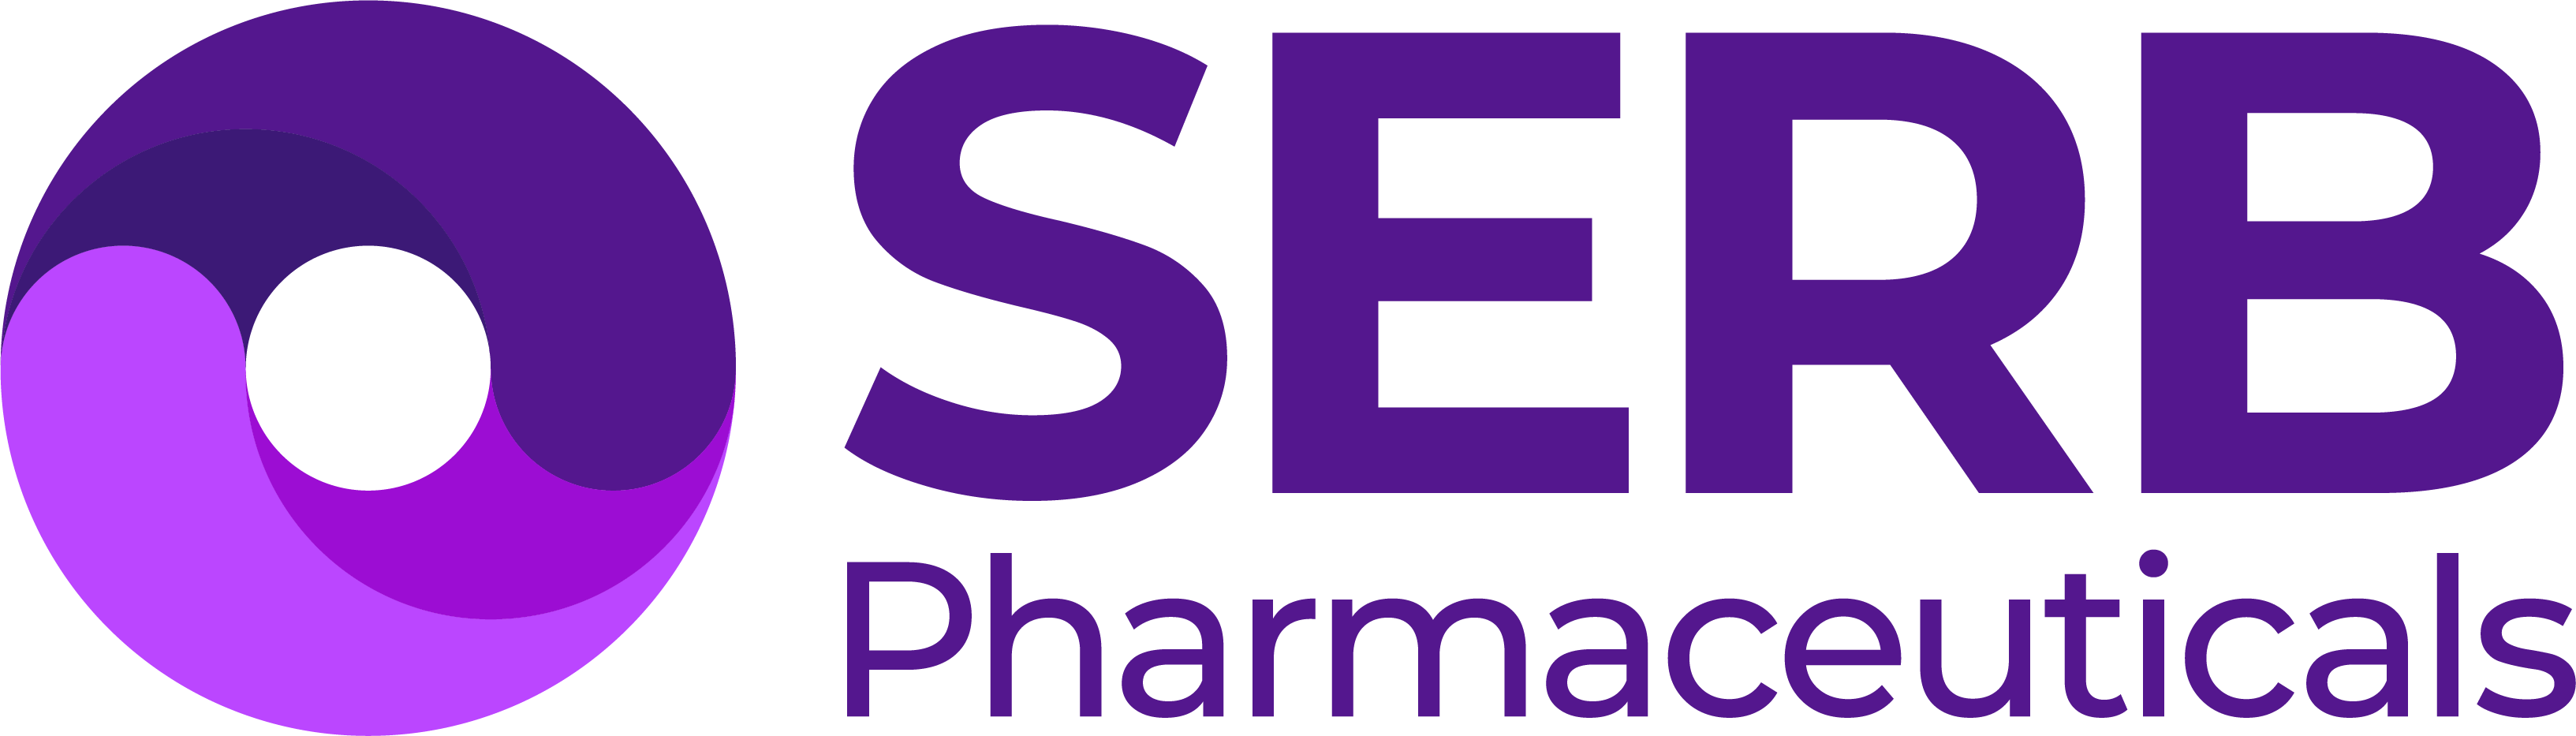 Homepage - SERB Pharmaceuticals